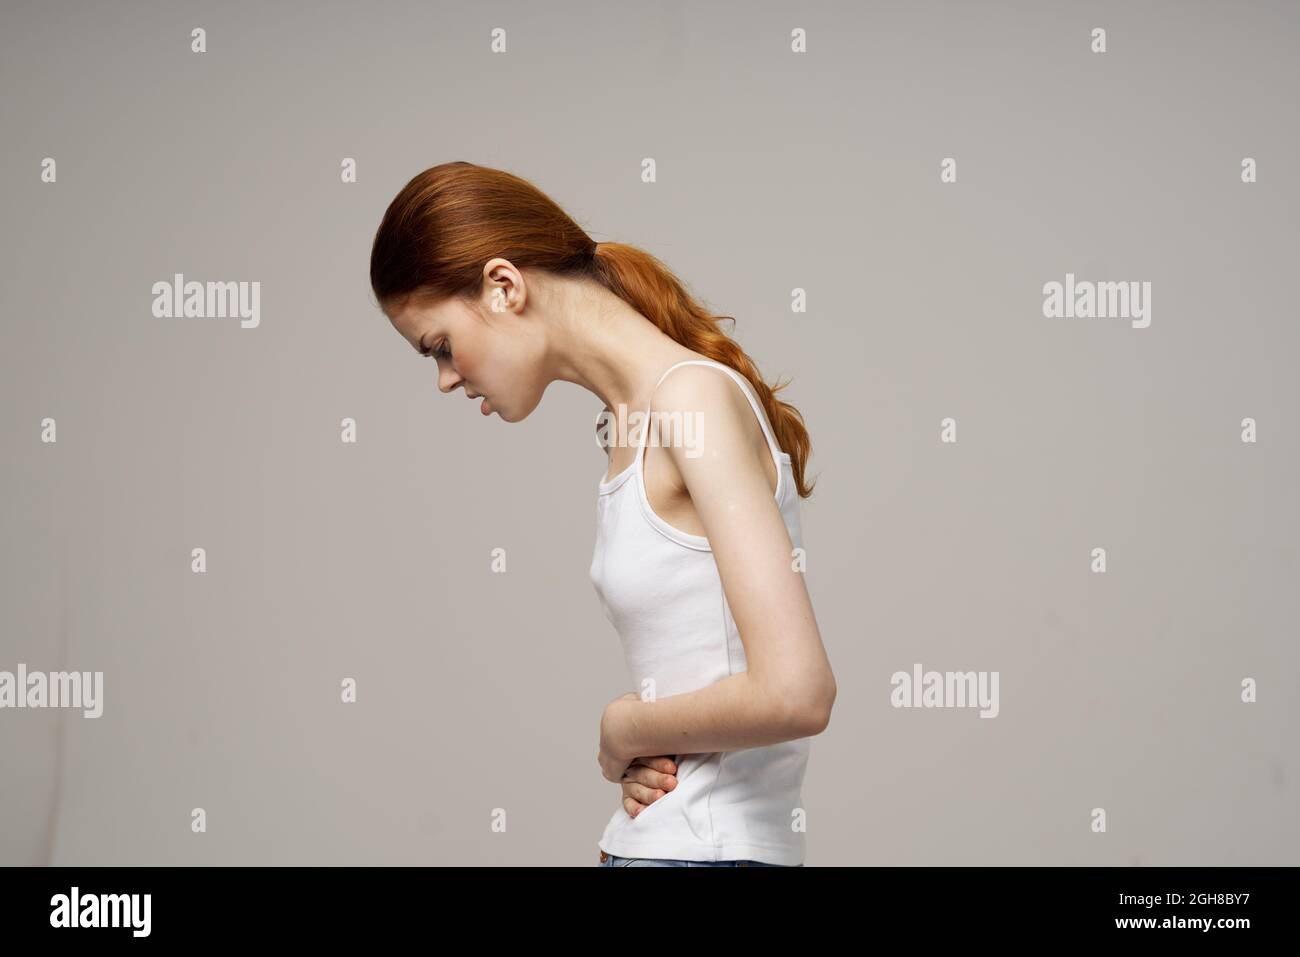 woman groin pain intimate illness gynecology discomfort light background  Stock Photo - Alamy